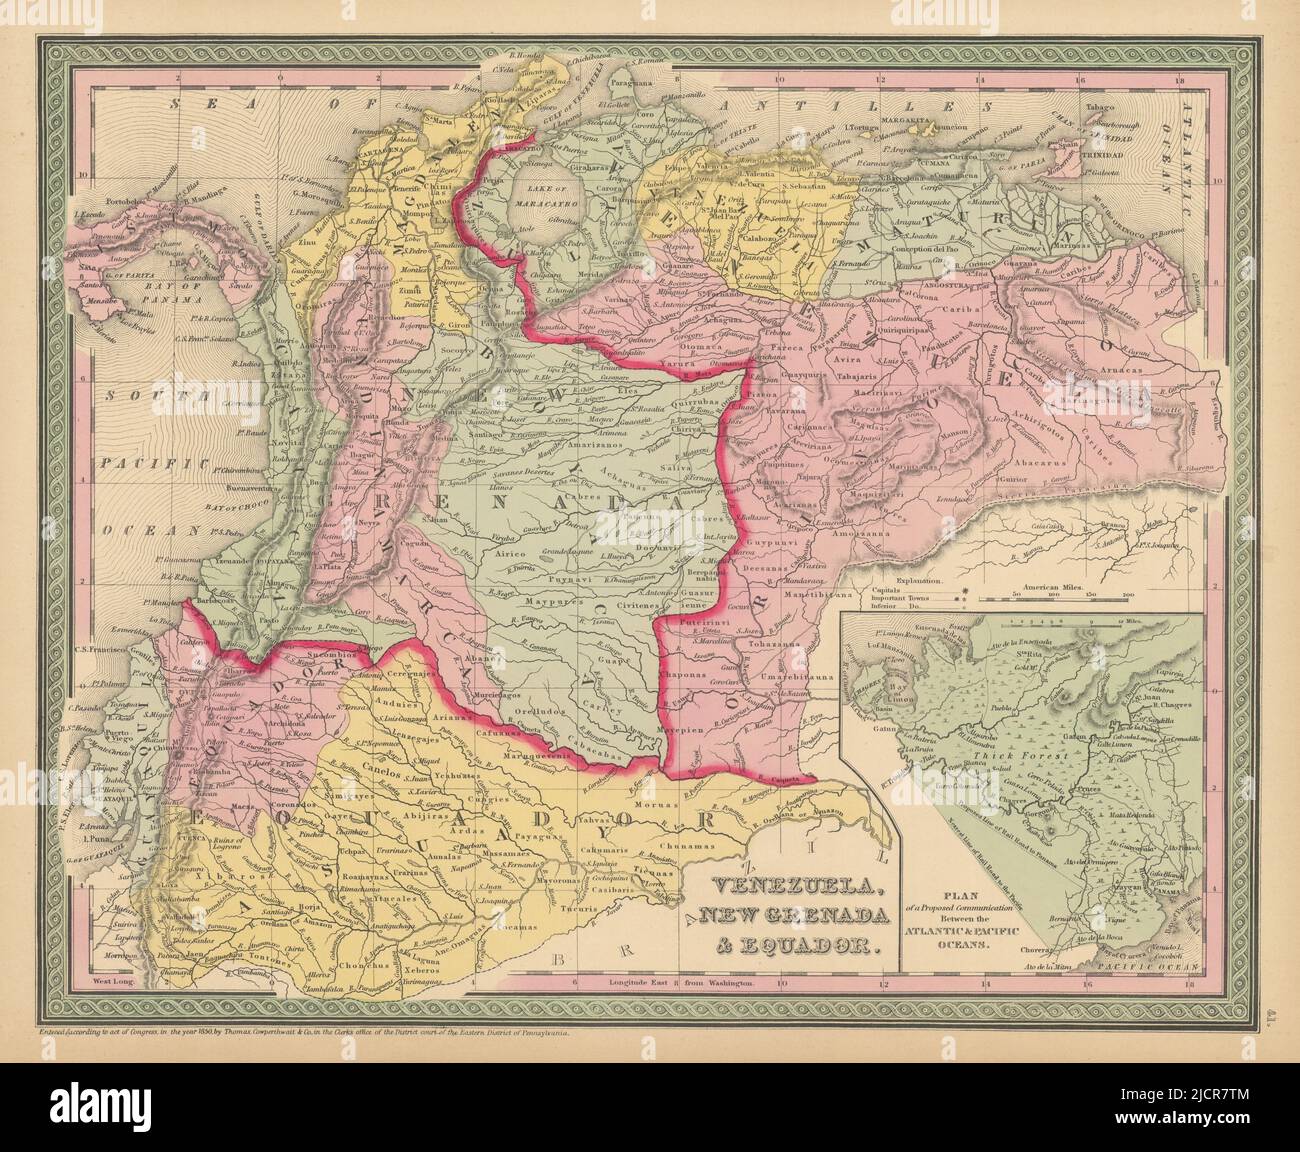 Venezuela, New Grenada & Equador. Panama canal proposal. COWPERTHWAIT 1852 map Stock Photo